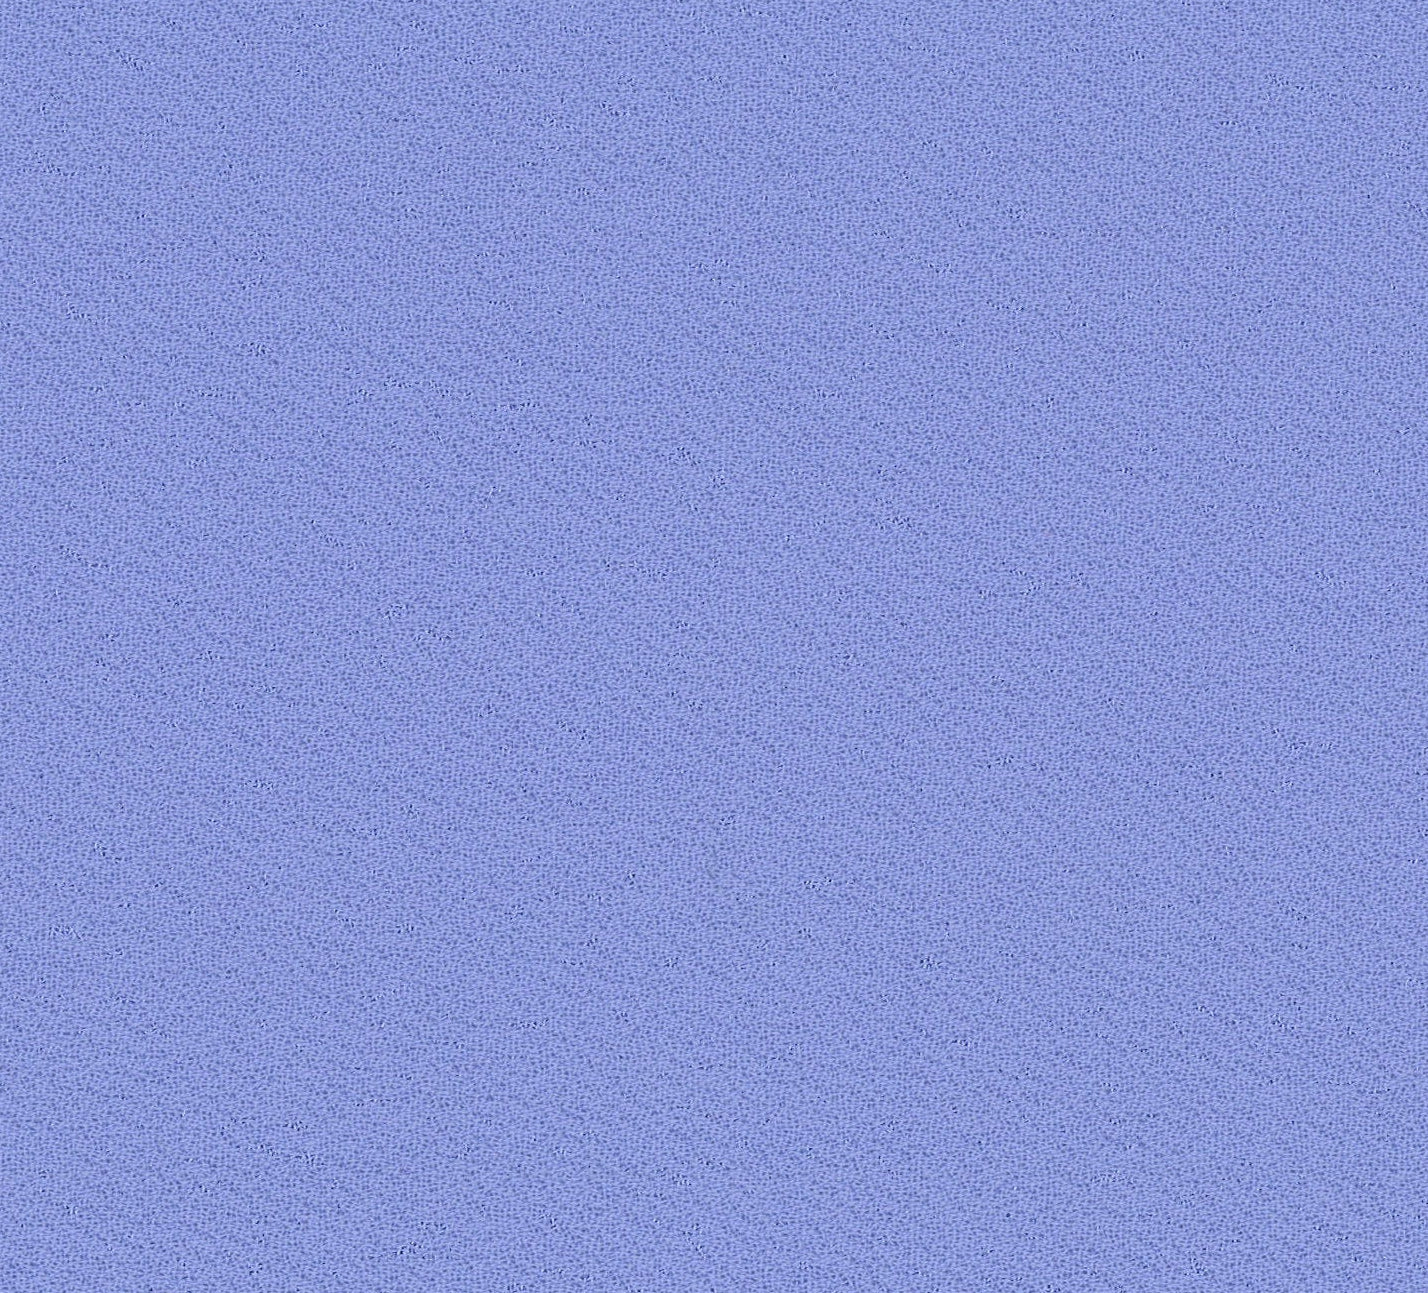 35005-02 Light Purple Polyester Plain Dyed 280g/yd 54&quot; plain dyed polyester purple woven Solid Color - knit fabric - woven fabric - fabric company - fabric wholesale - fabric b2b - fabric factory - high quality fabric - hong kong fabric - fabric hk - acetate fabric - cotton fabric - linen fabric - metallic fabric - nylon fabric - polyester fabric - spandex fabric - chun wing hing - cwh hk - fabric worldwide ship - 針織布 - 梳織布 - 布料公司- 布料批發 - 香港布料 - 秦榮興